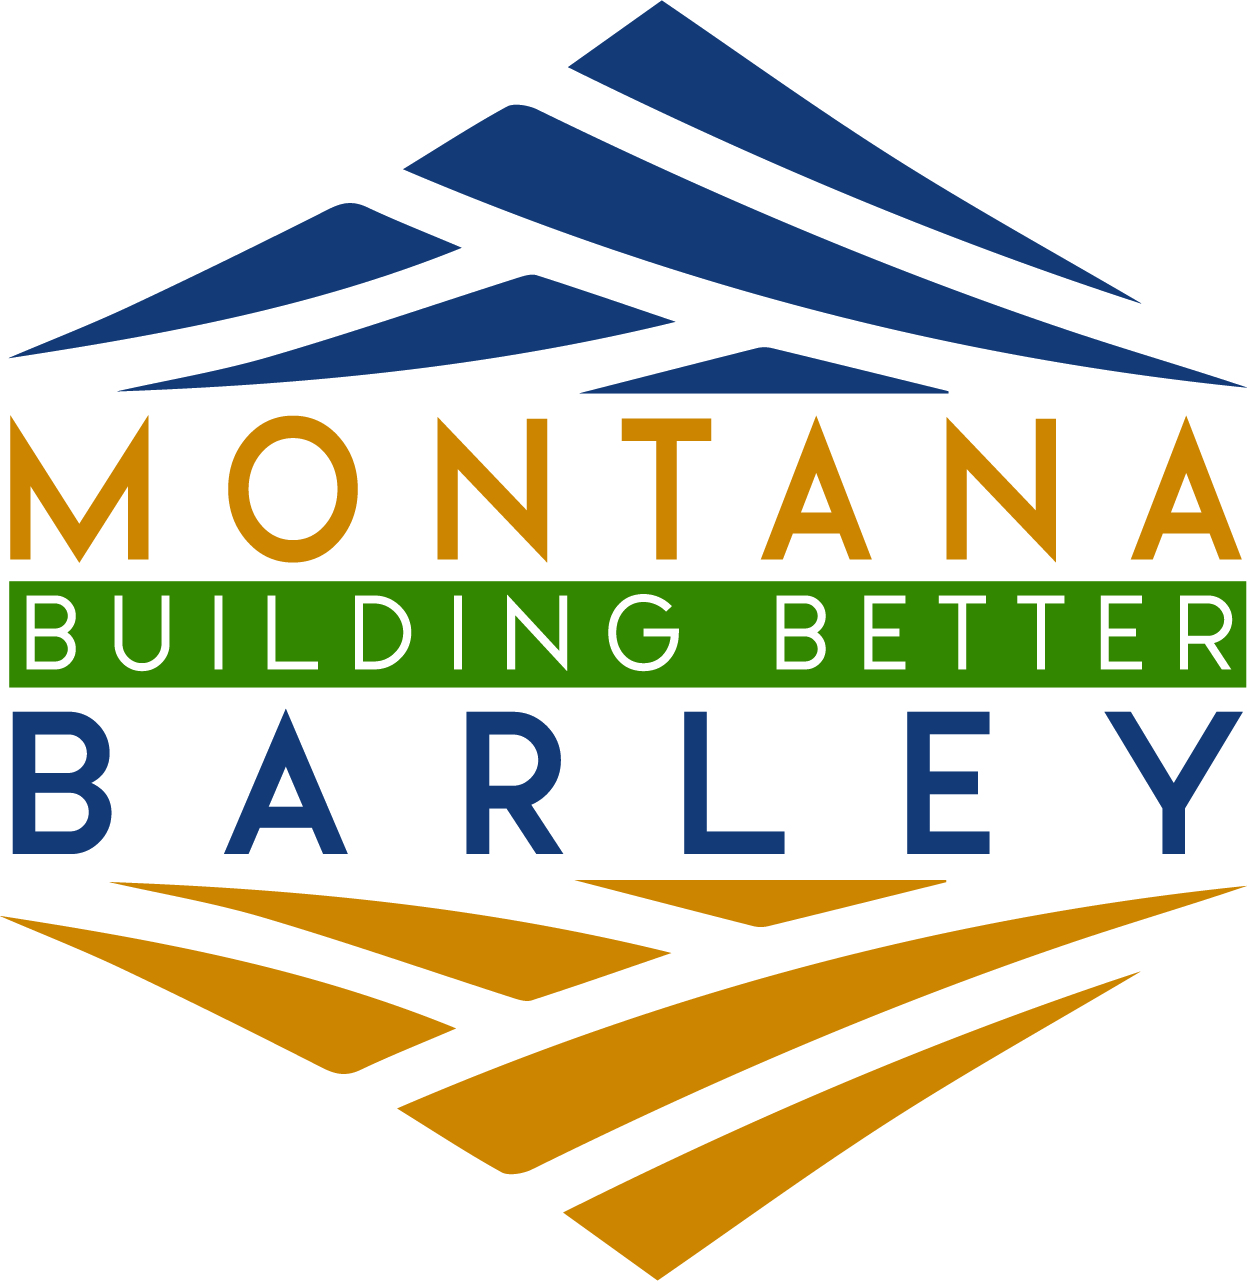 MSU Barley Slogan "Montana Building Better Barley"